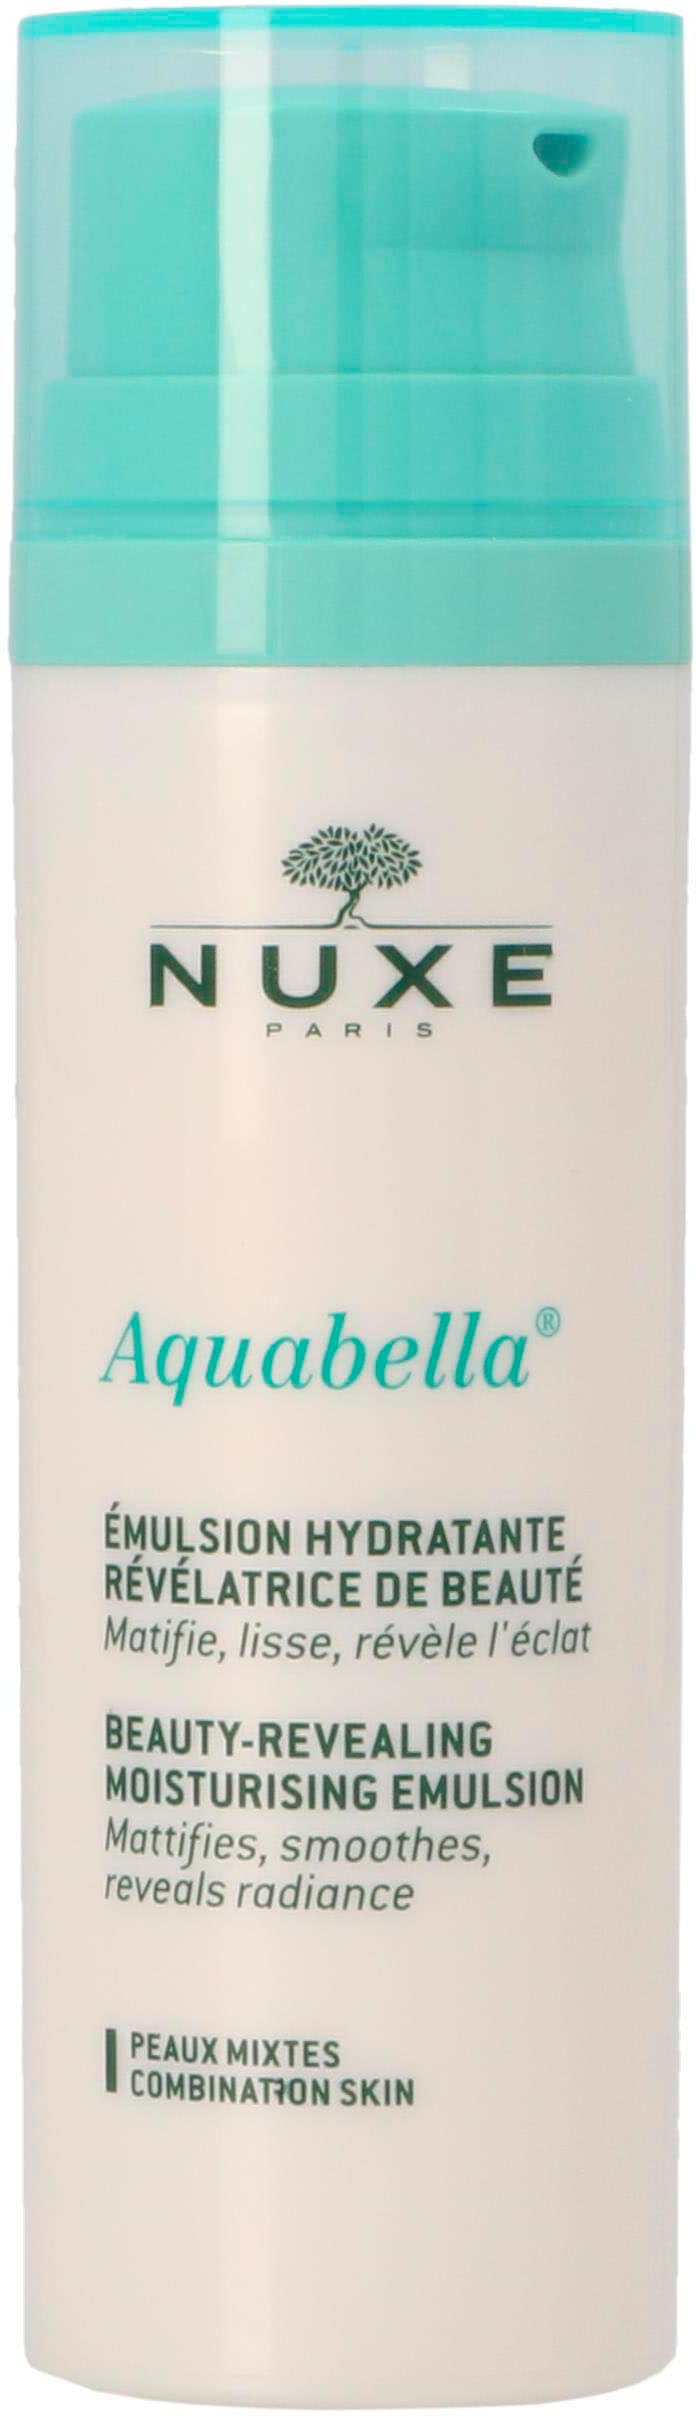 Nuxe Gesichtsserum »Aquabella Beauty Revealing Emulsion« Moisturizing